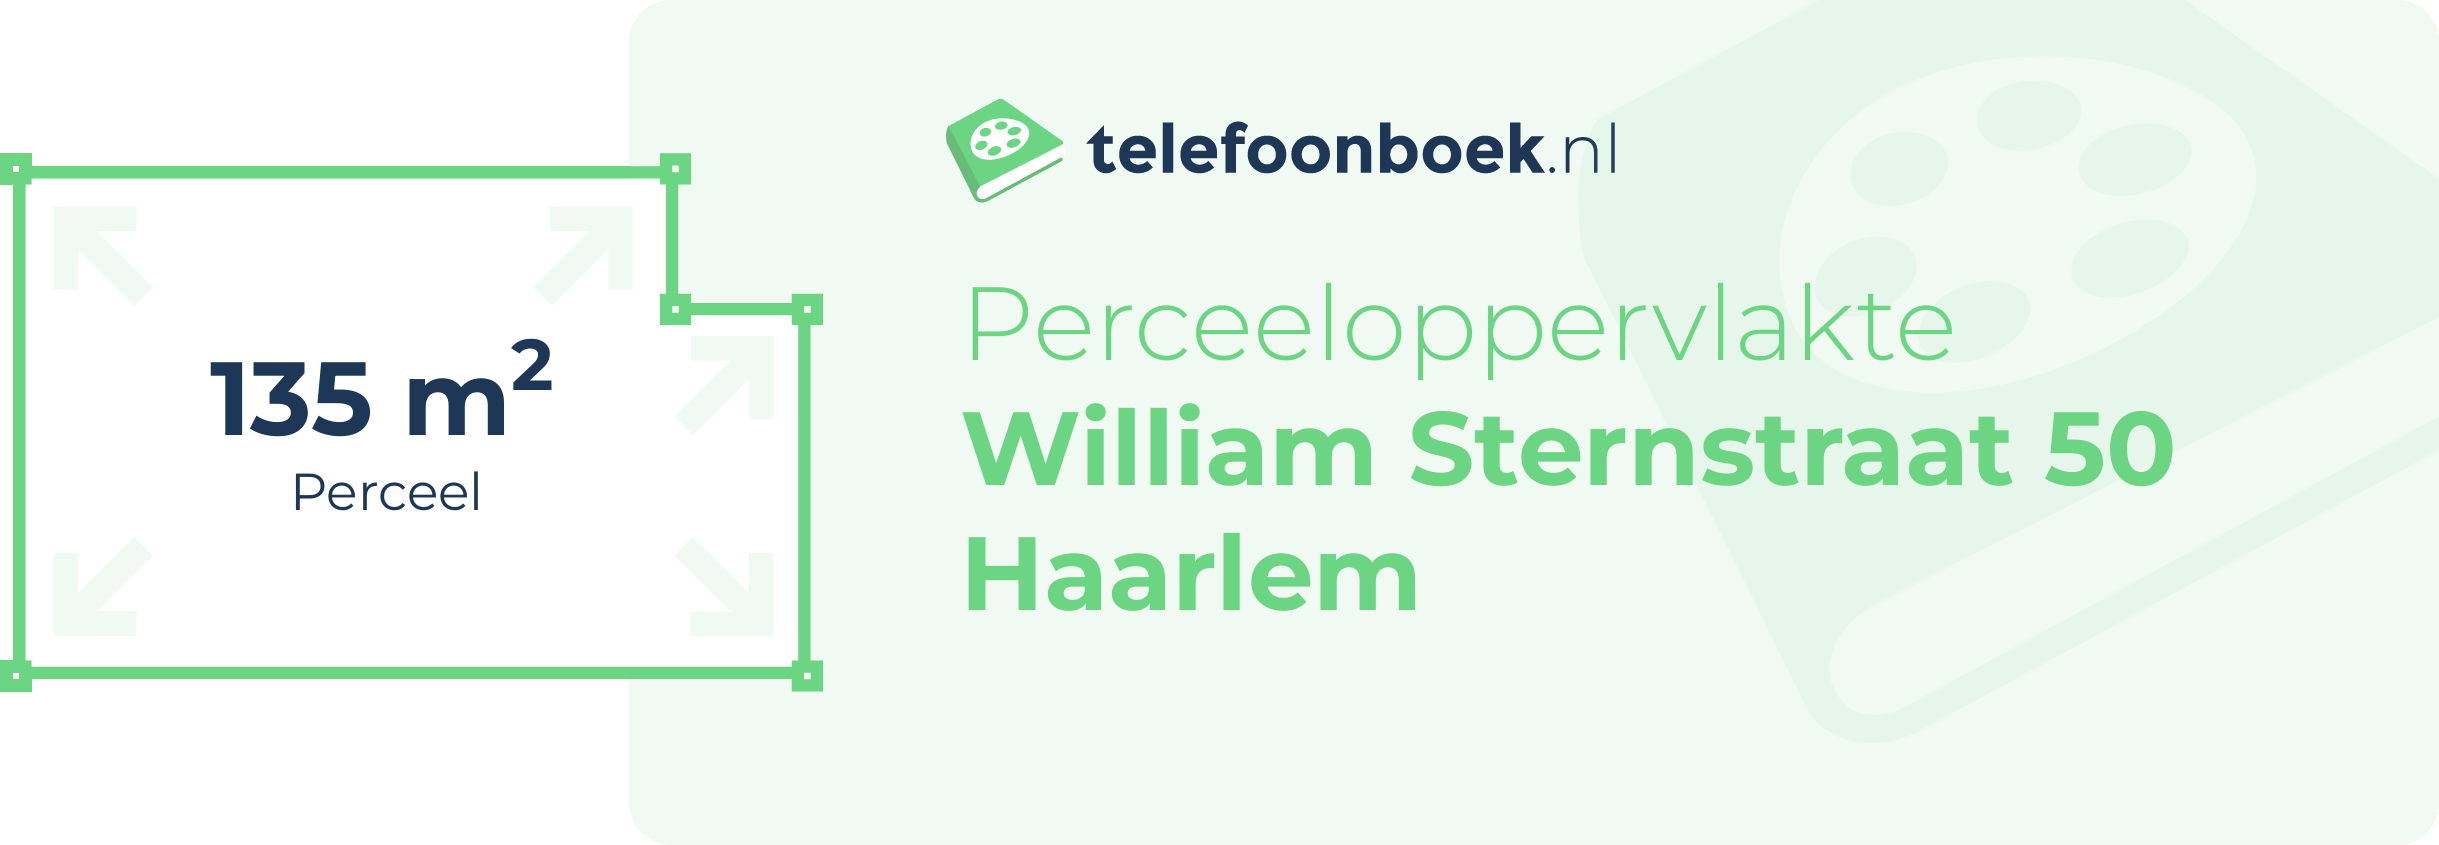 Perceeloppervlakte William Sternstraat 50 Haarlem